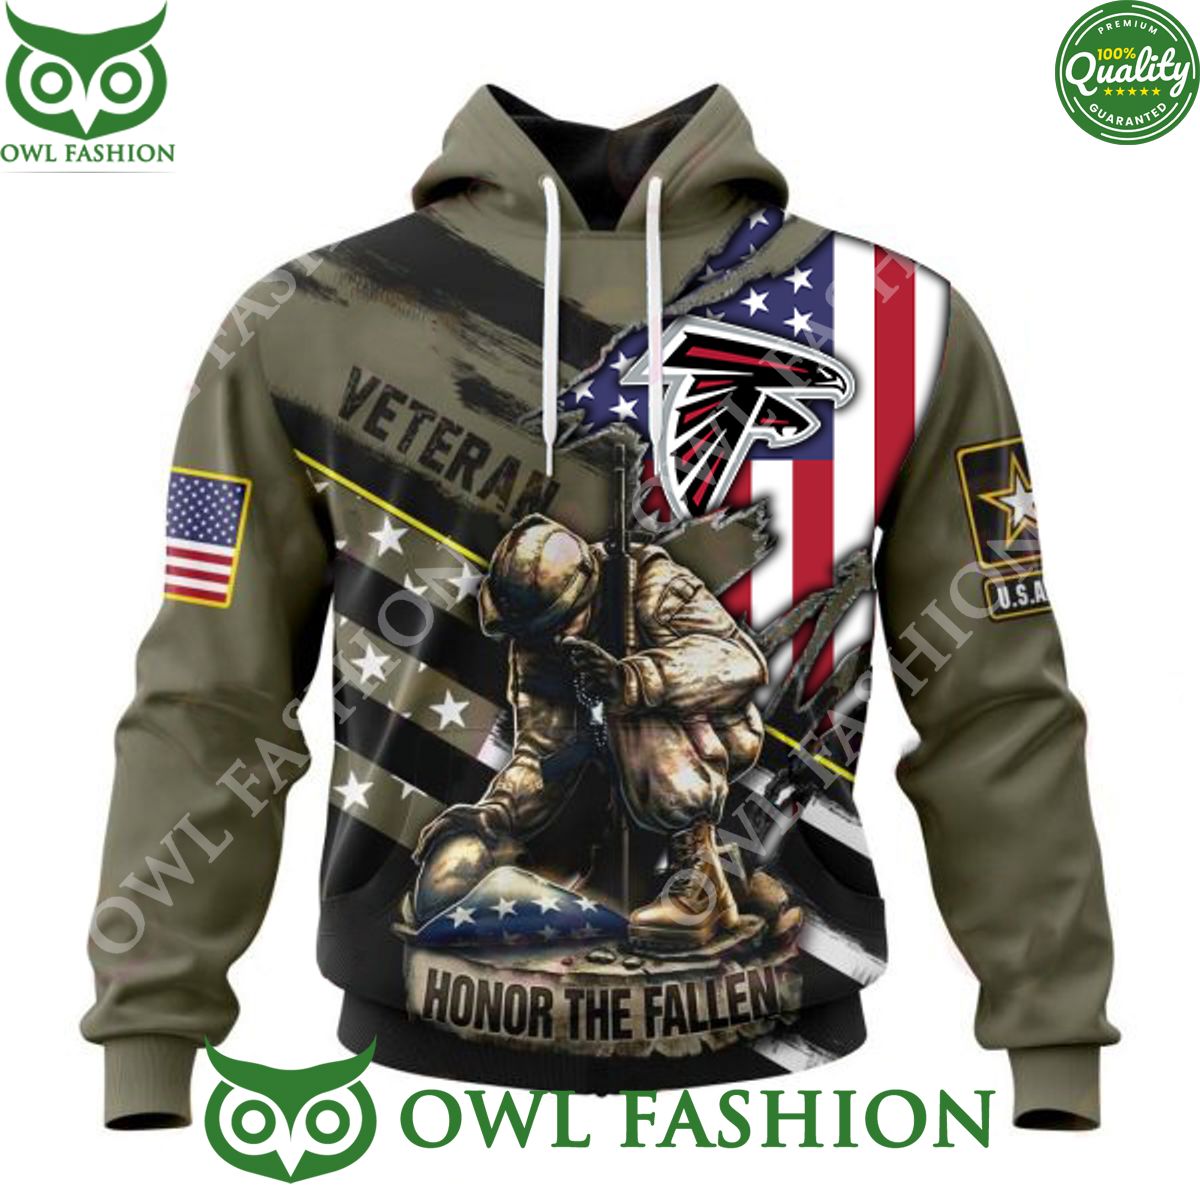 nfl atlanta falcons honor veterans and their families 3d hoodie t shirt sweatshirt 1 Ukcv9.jpg